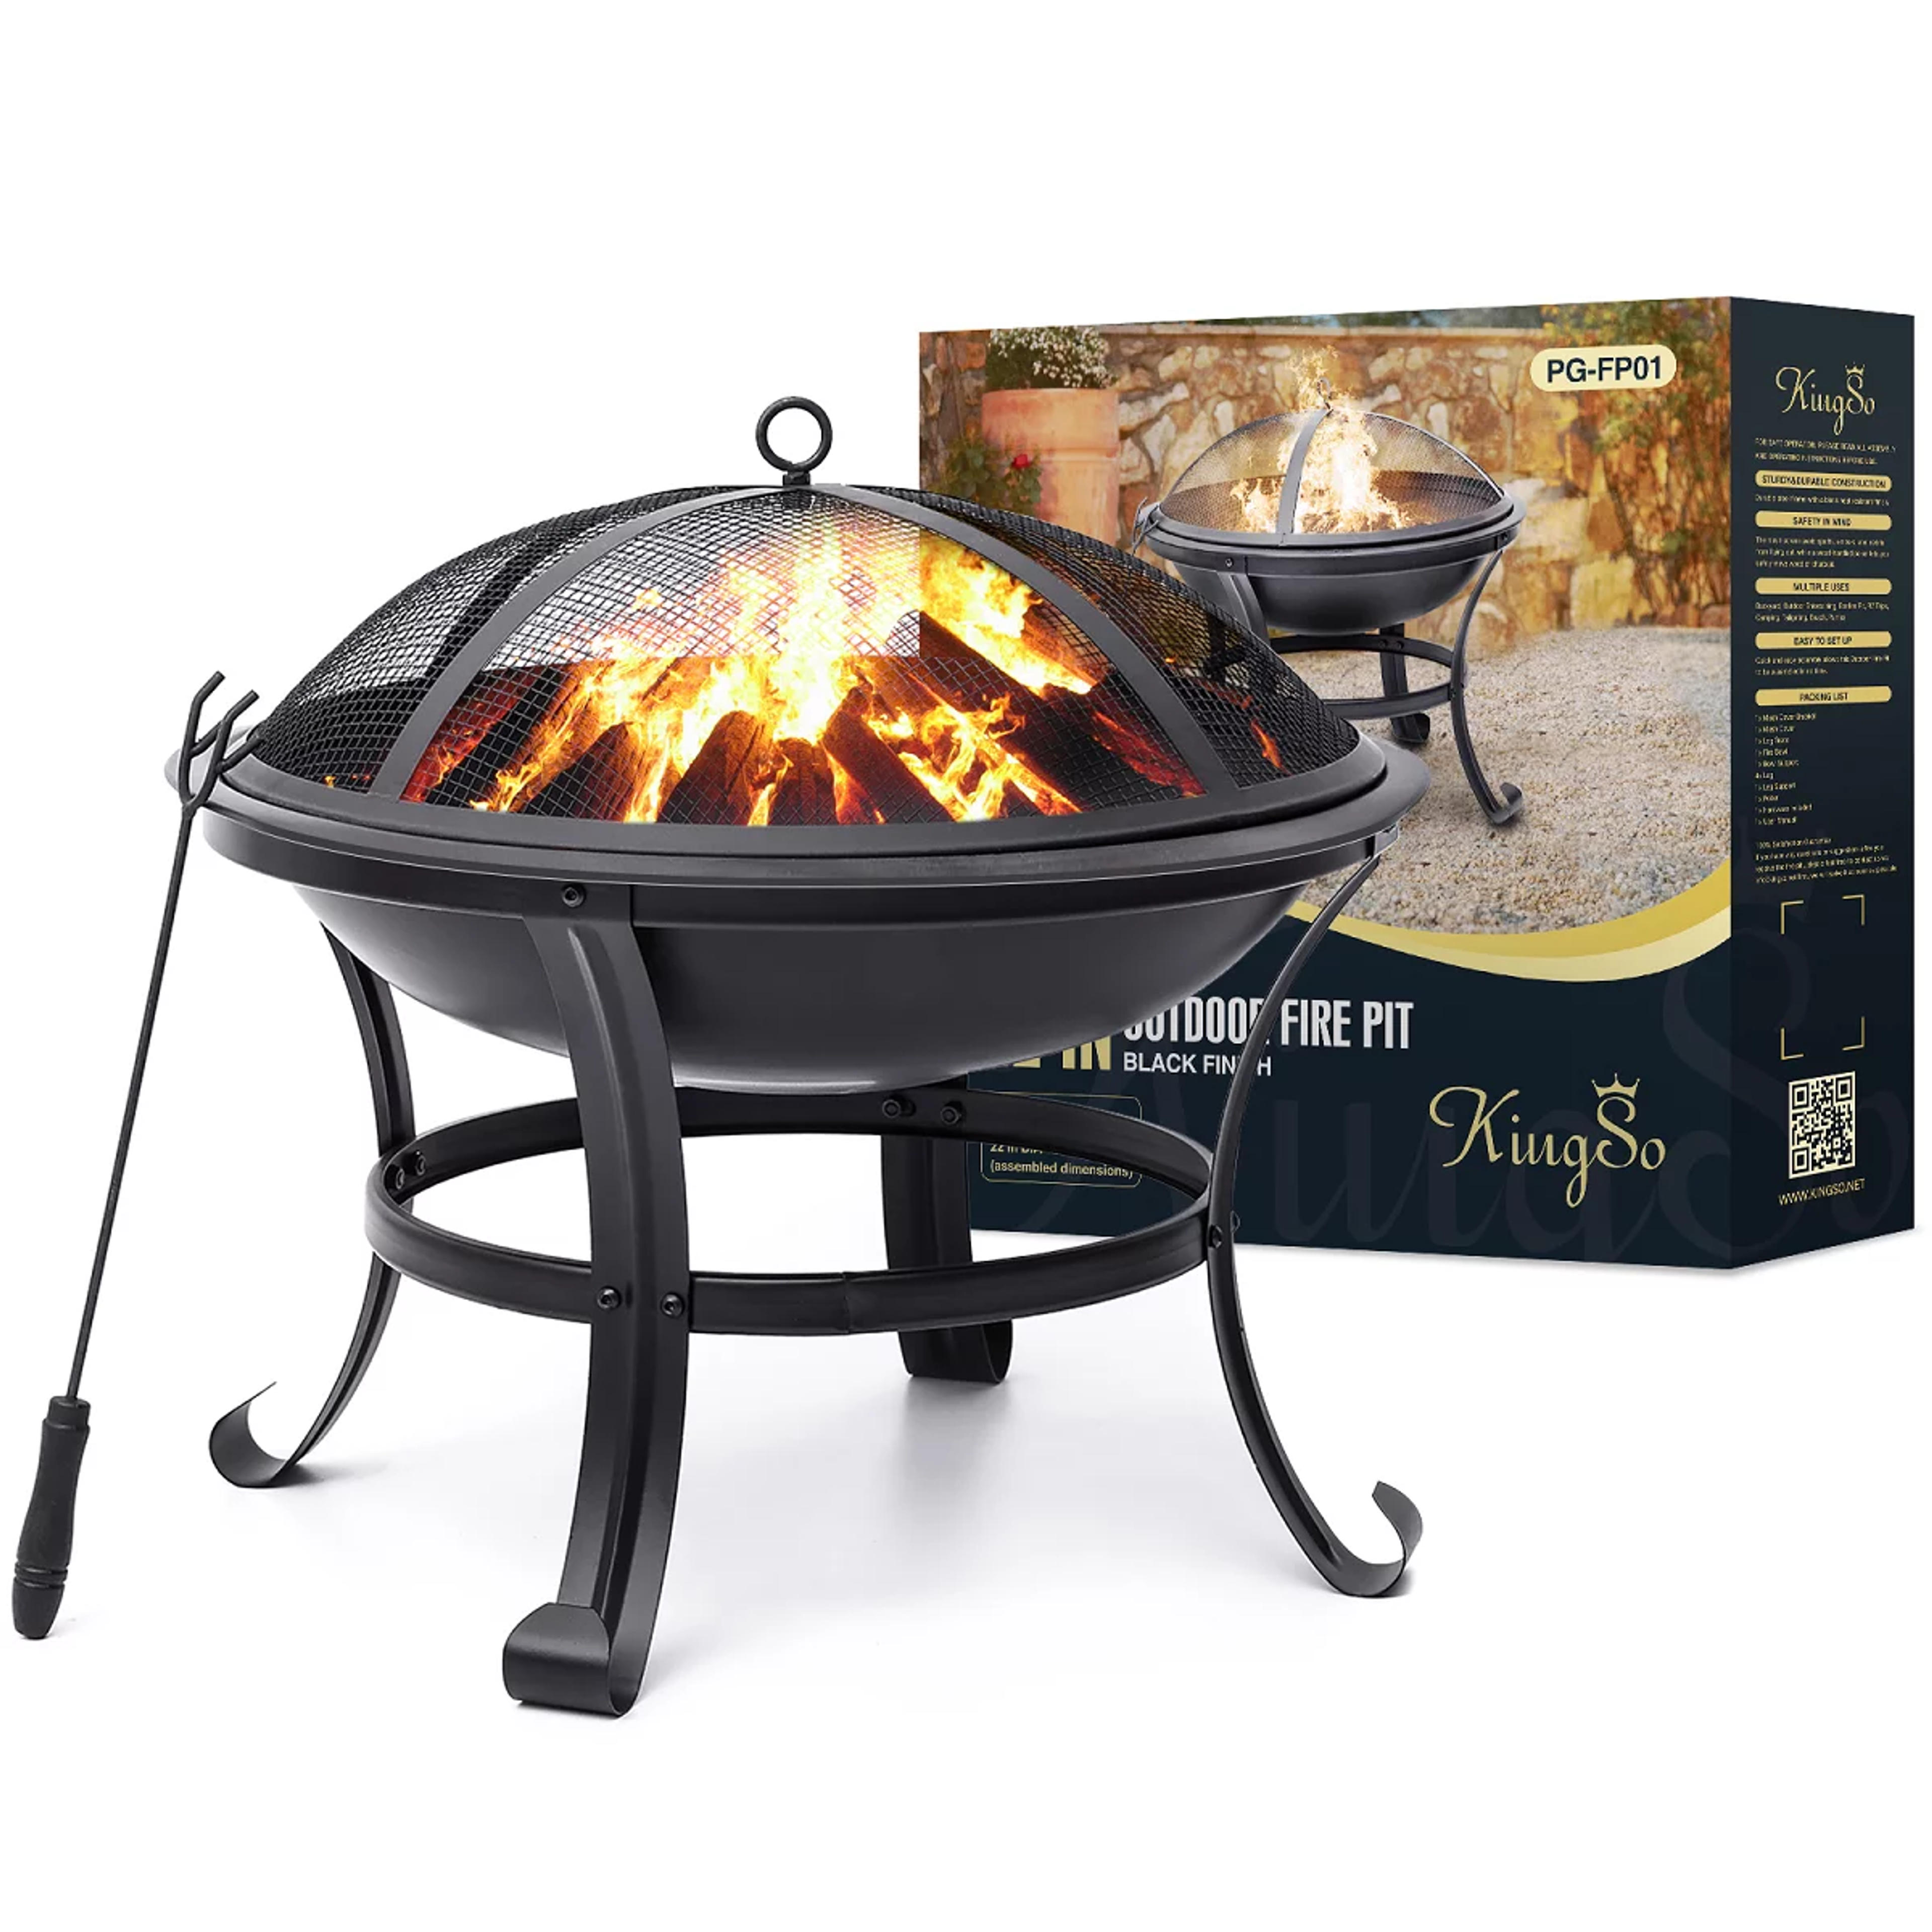 KingSo 22" Wood Burning Fire Pit for Camping Picnic Bonfire Patio Outside Backyard Garden, Round Steel Black - Walmart.com